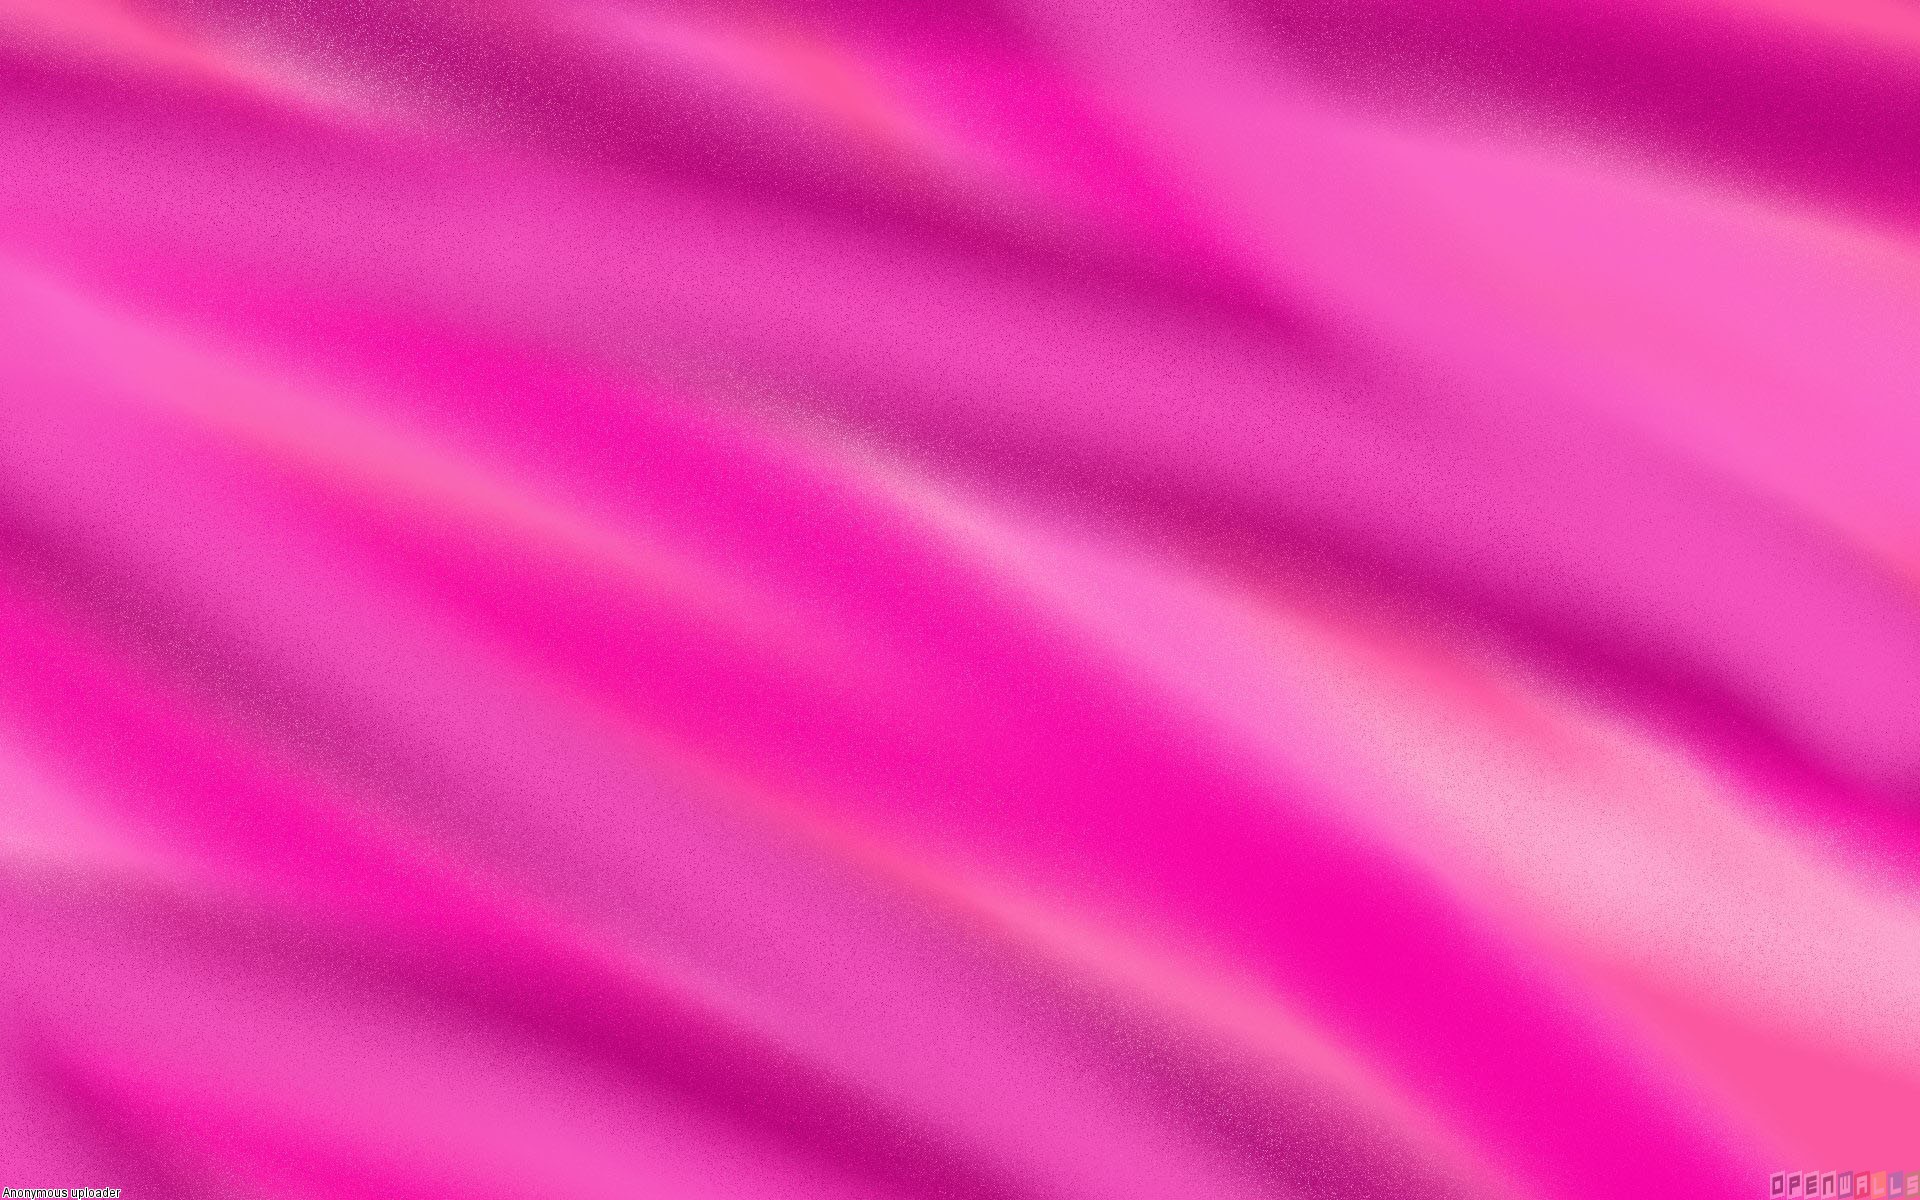 Pink Background wallpaper   342359